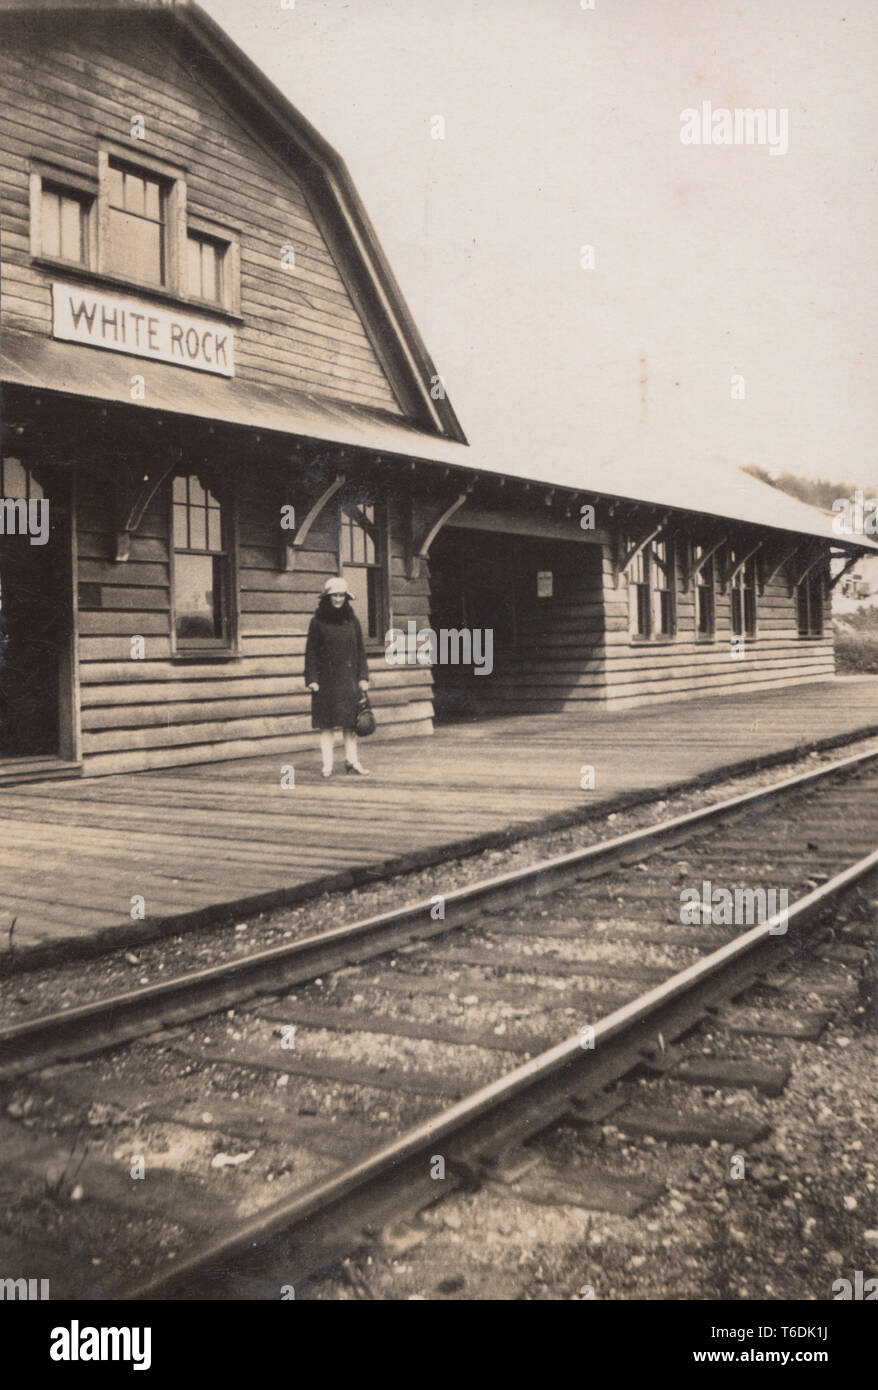 Lady Stood On The Platform of White Rock Train Station, British Columbia, Canada Stock Photo